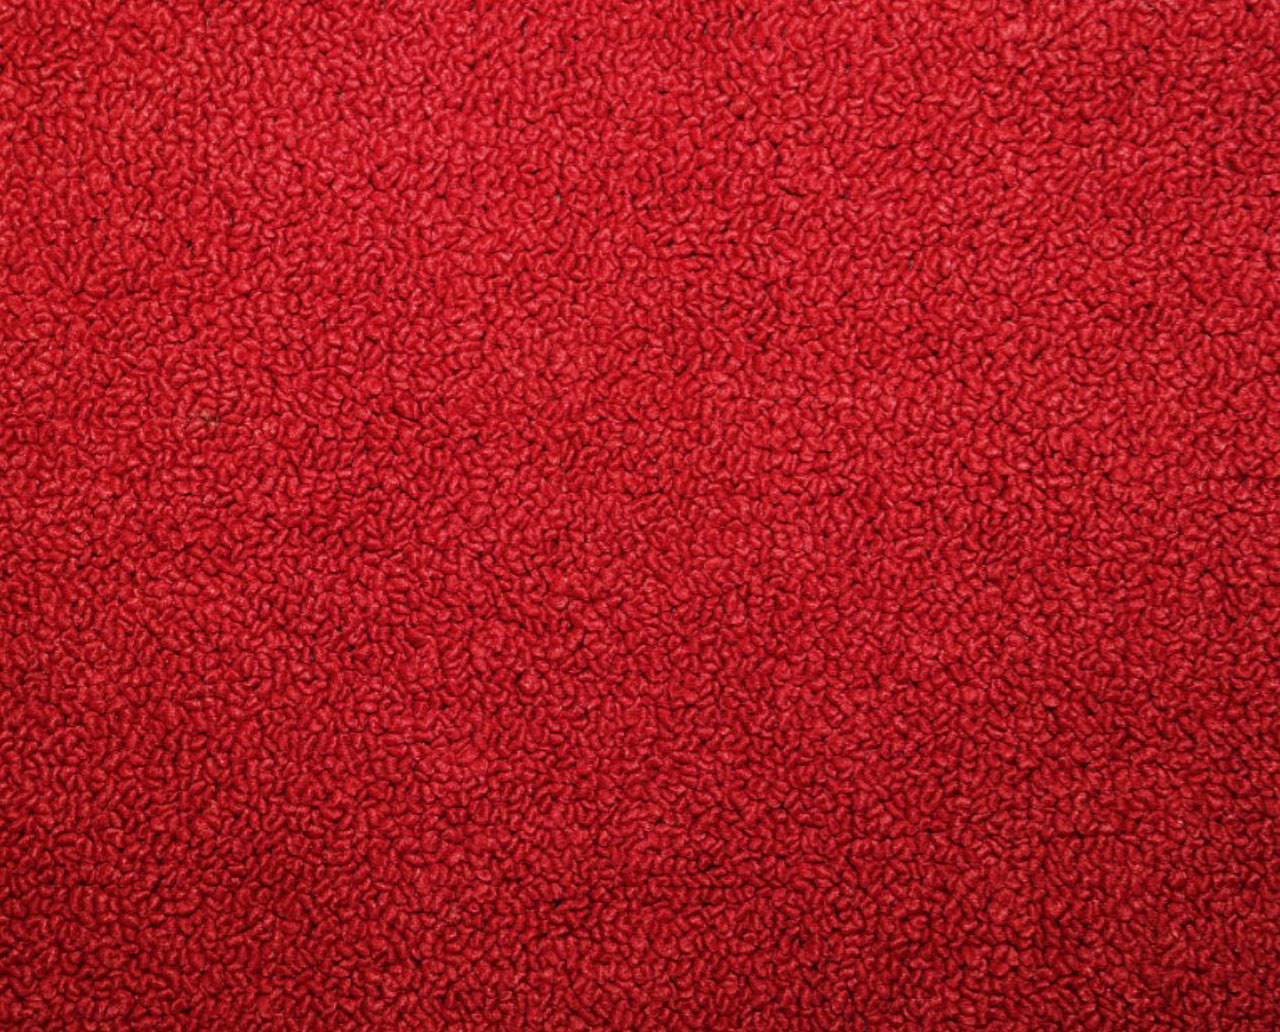 Holden Torana LJ Torana SL Coupe 42R Calypso Red Carpet (Image 1 of 1)